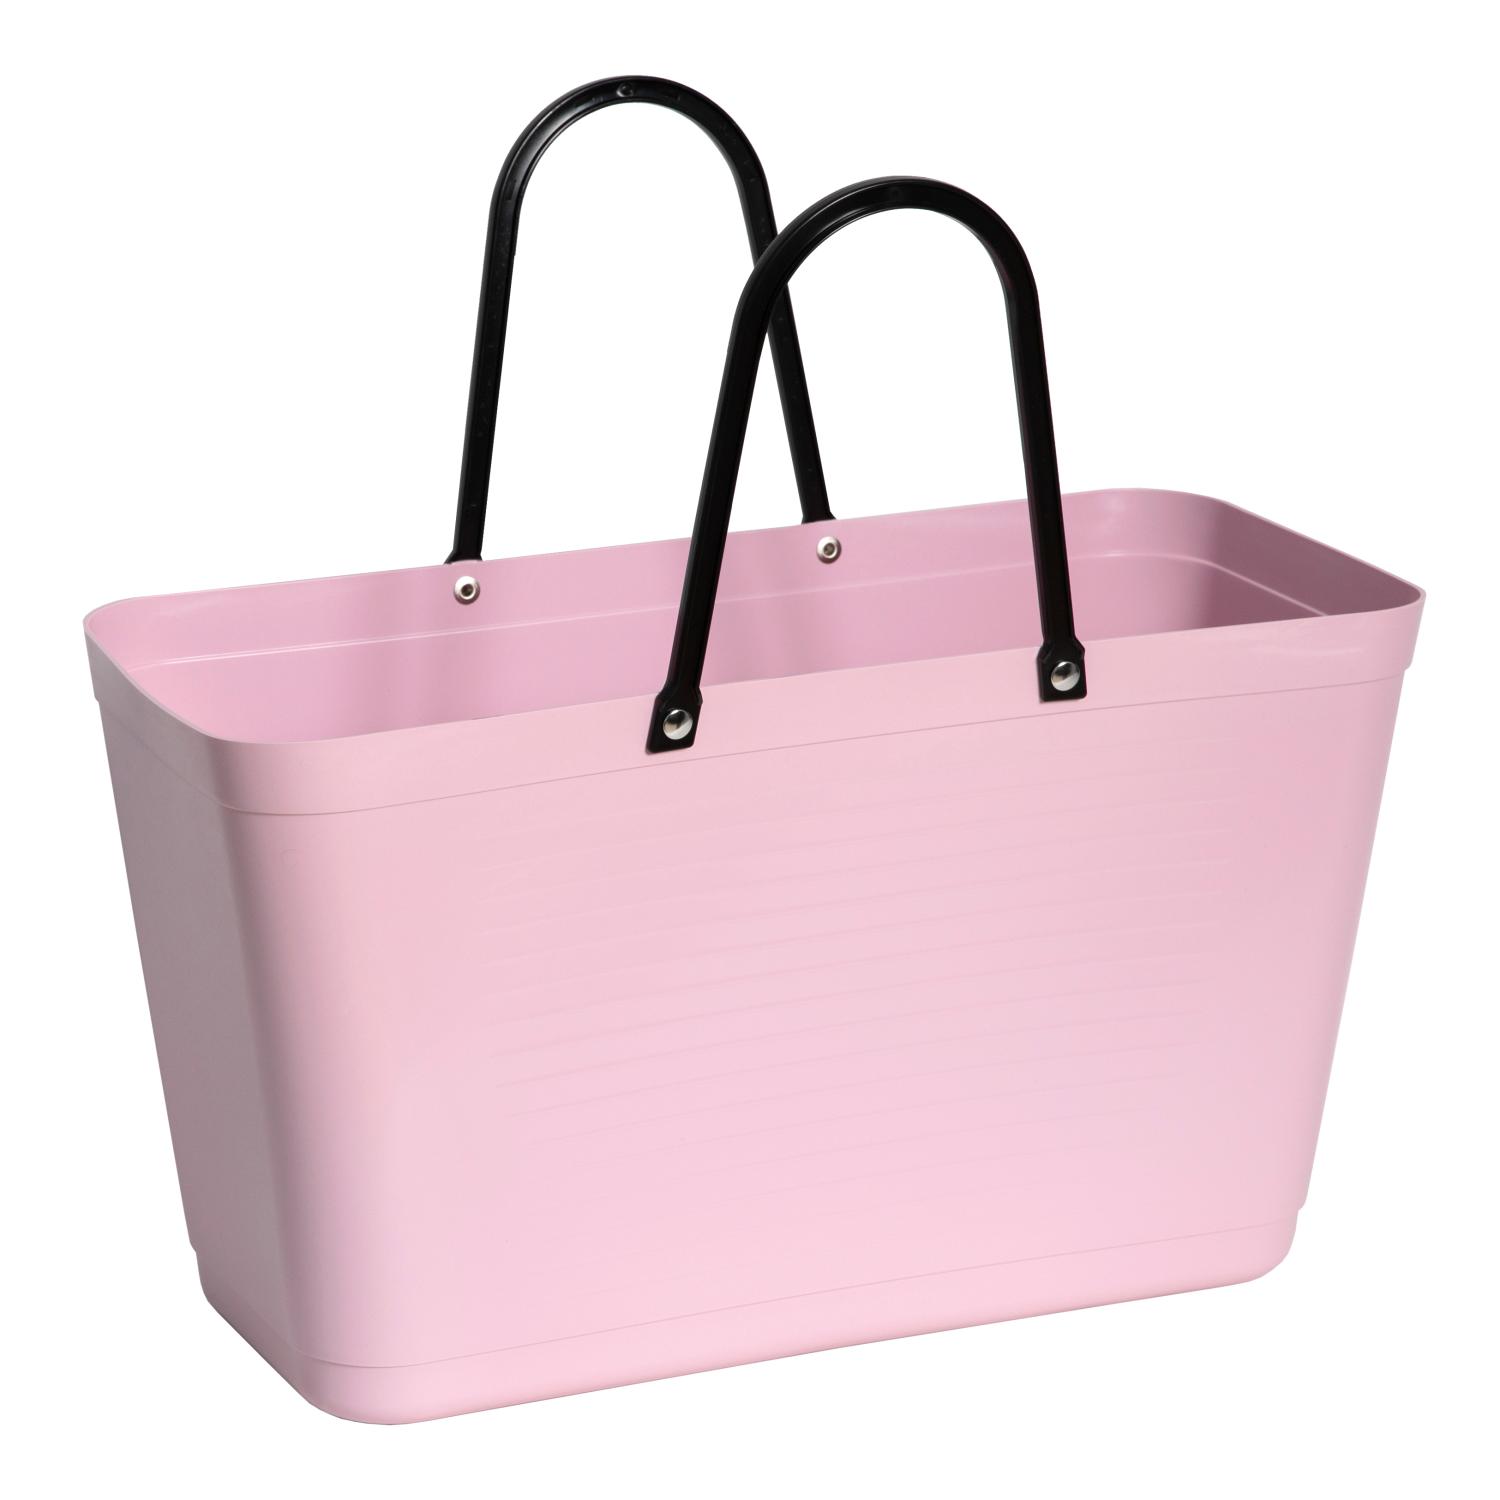 Hinza bag Large Dusty Pink - Green Plastic